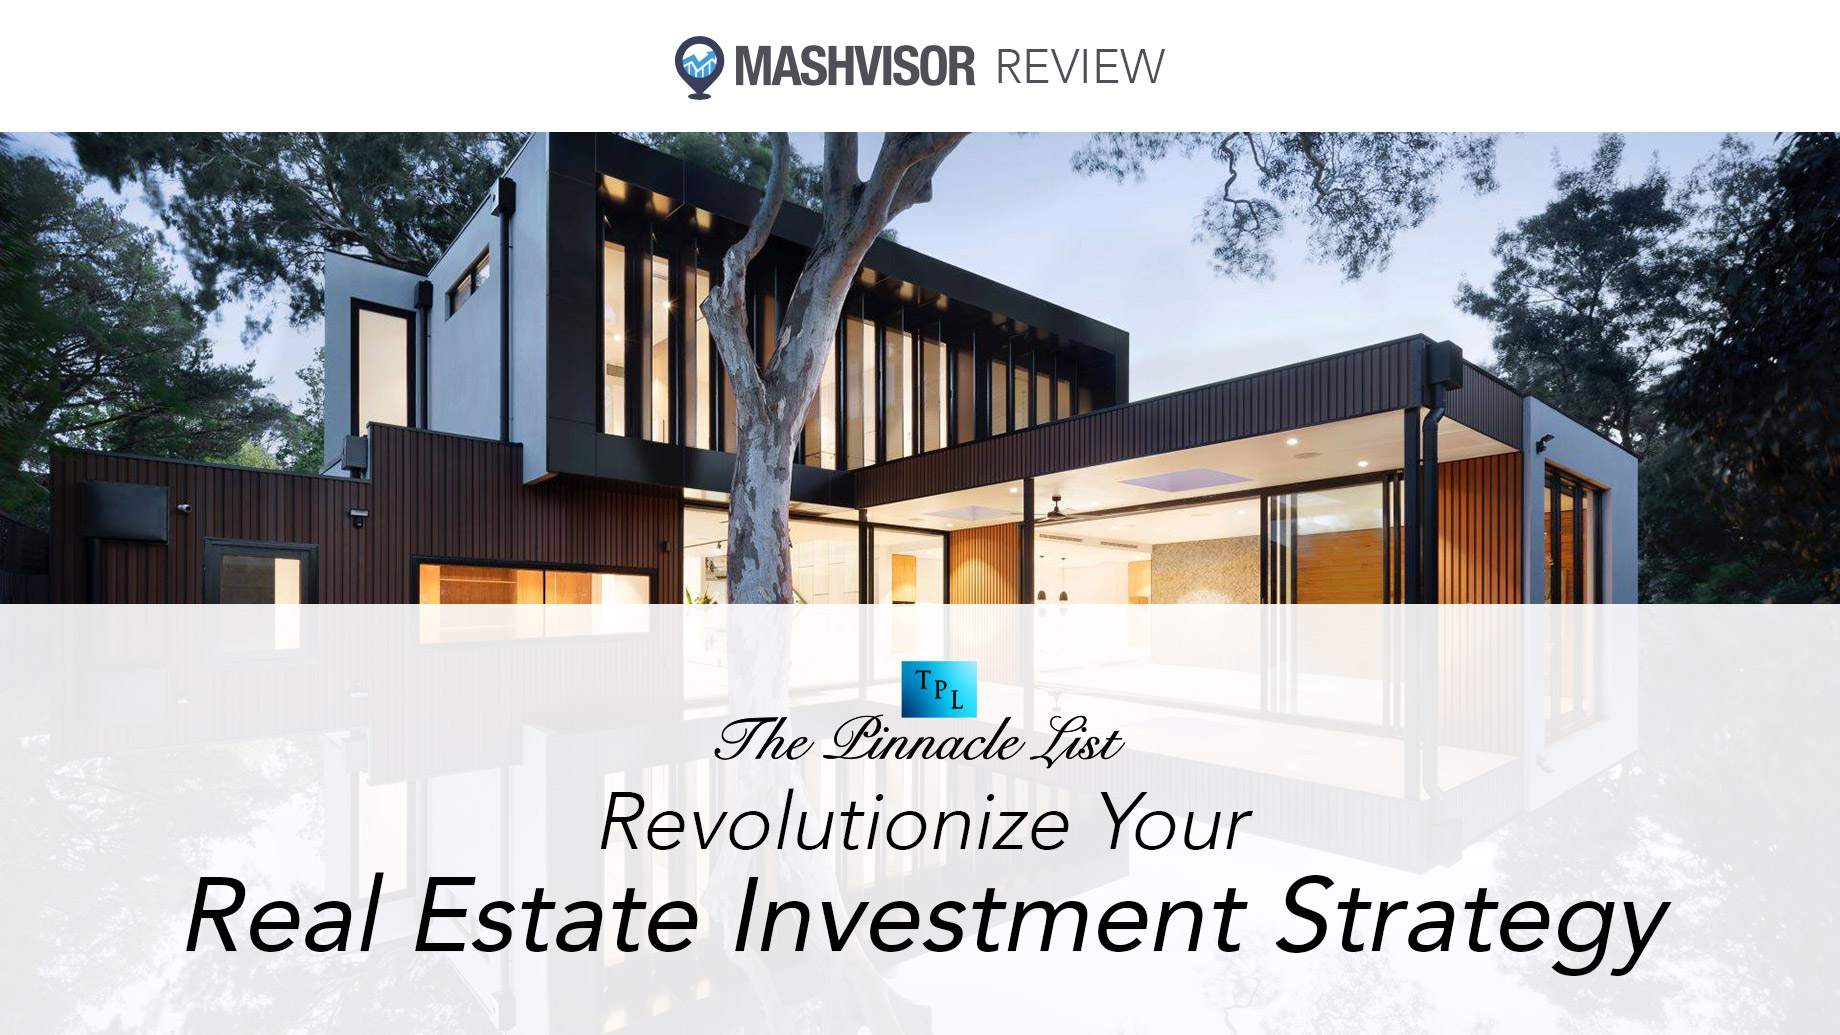 Mashvisor Review - Revolutionize Your Real Estate Investment Strategy